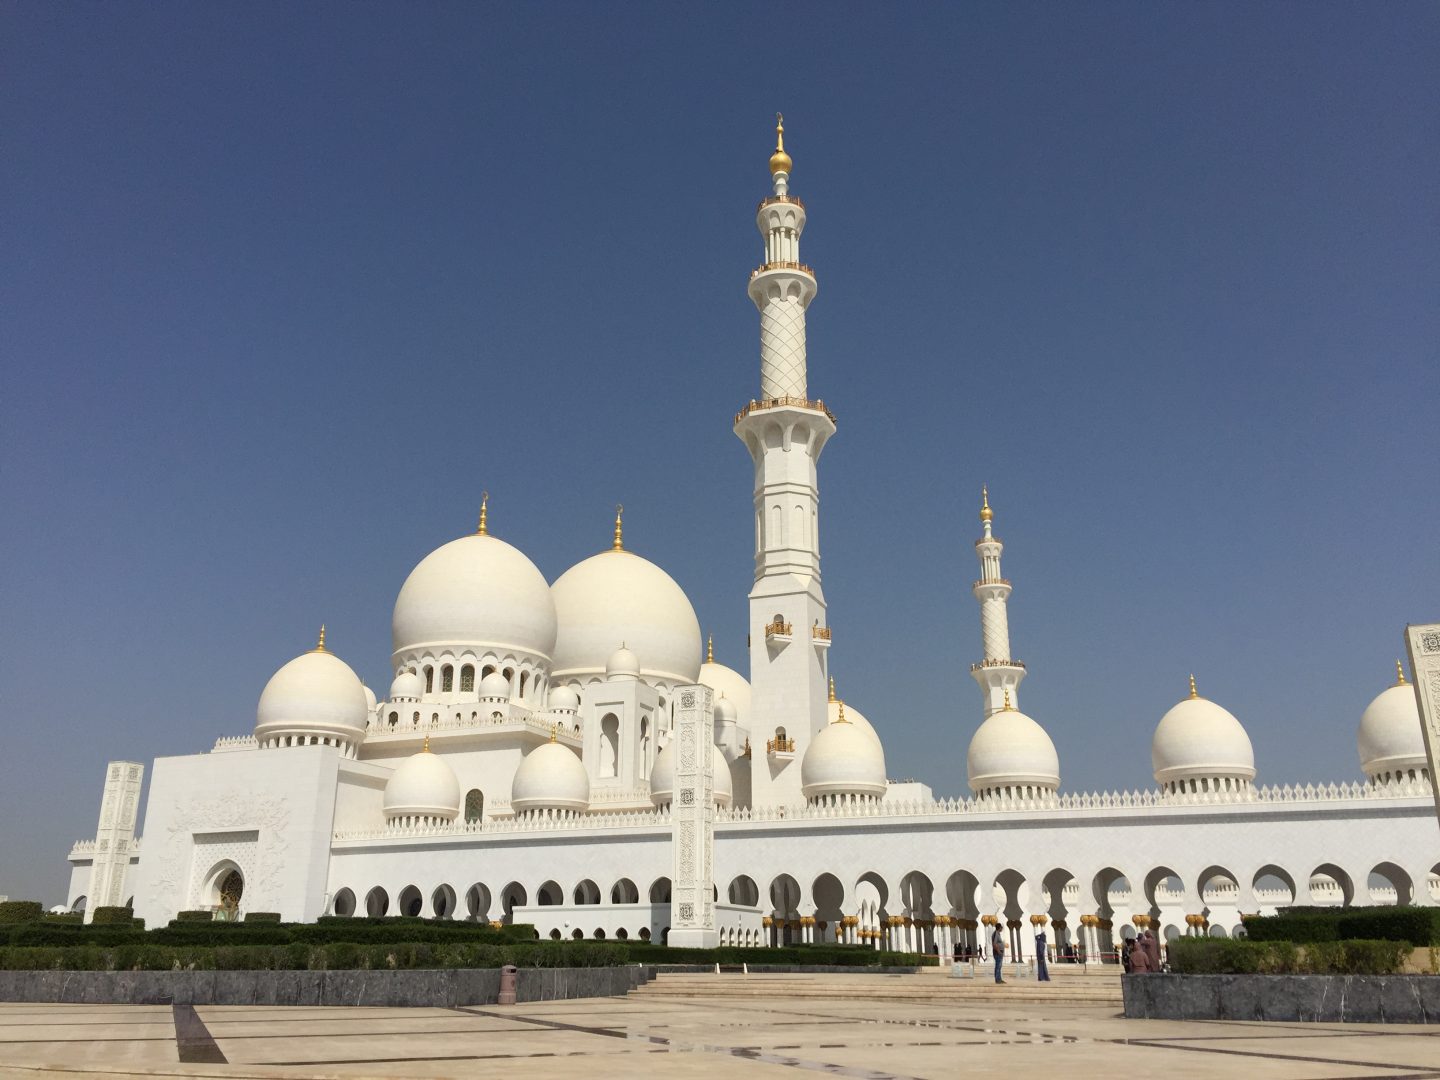 Viajar sola a Abu Dhabi